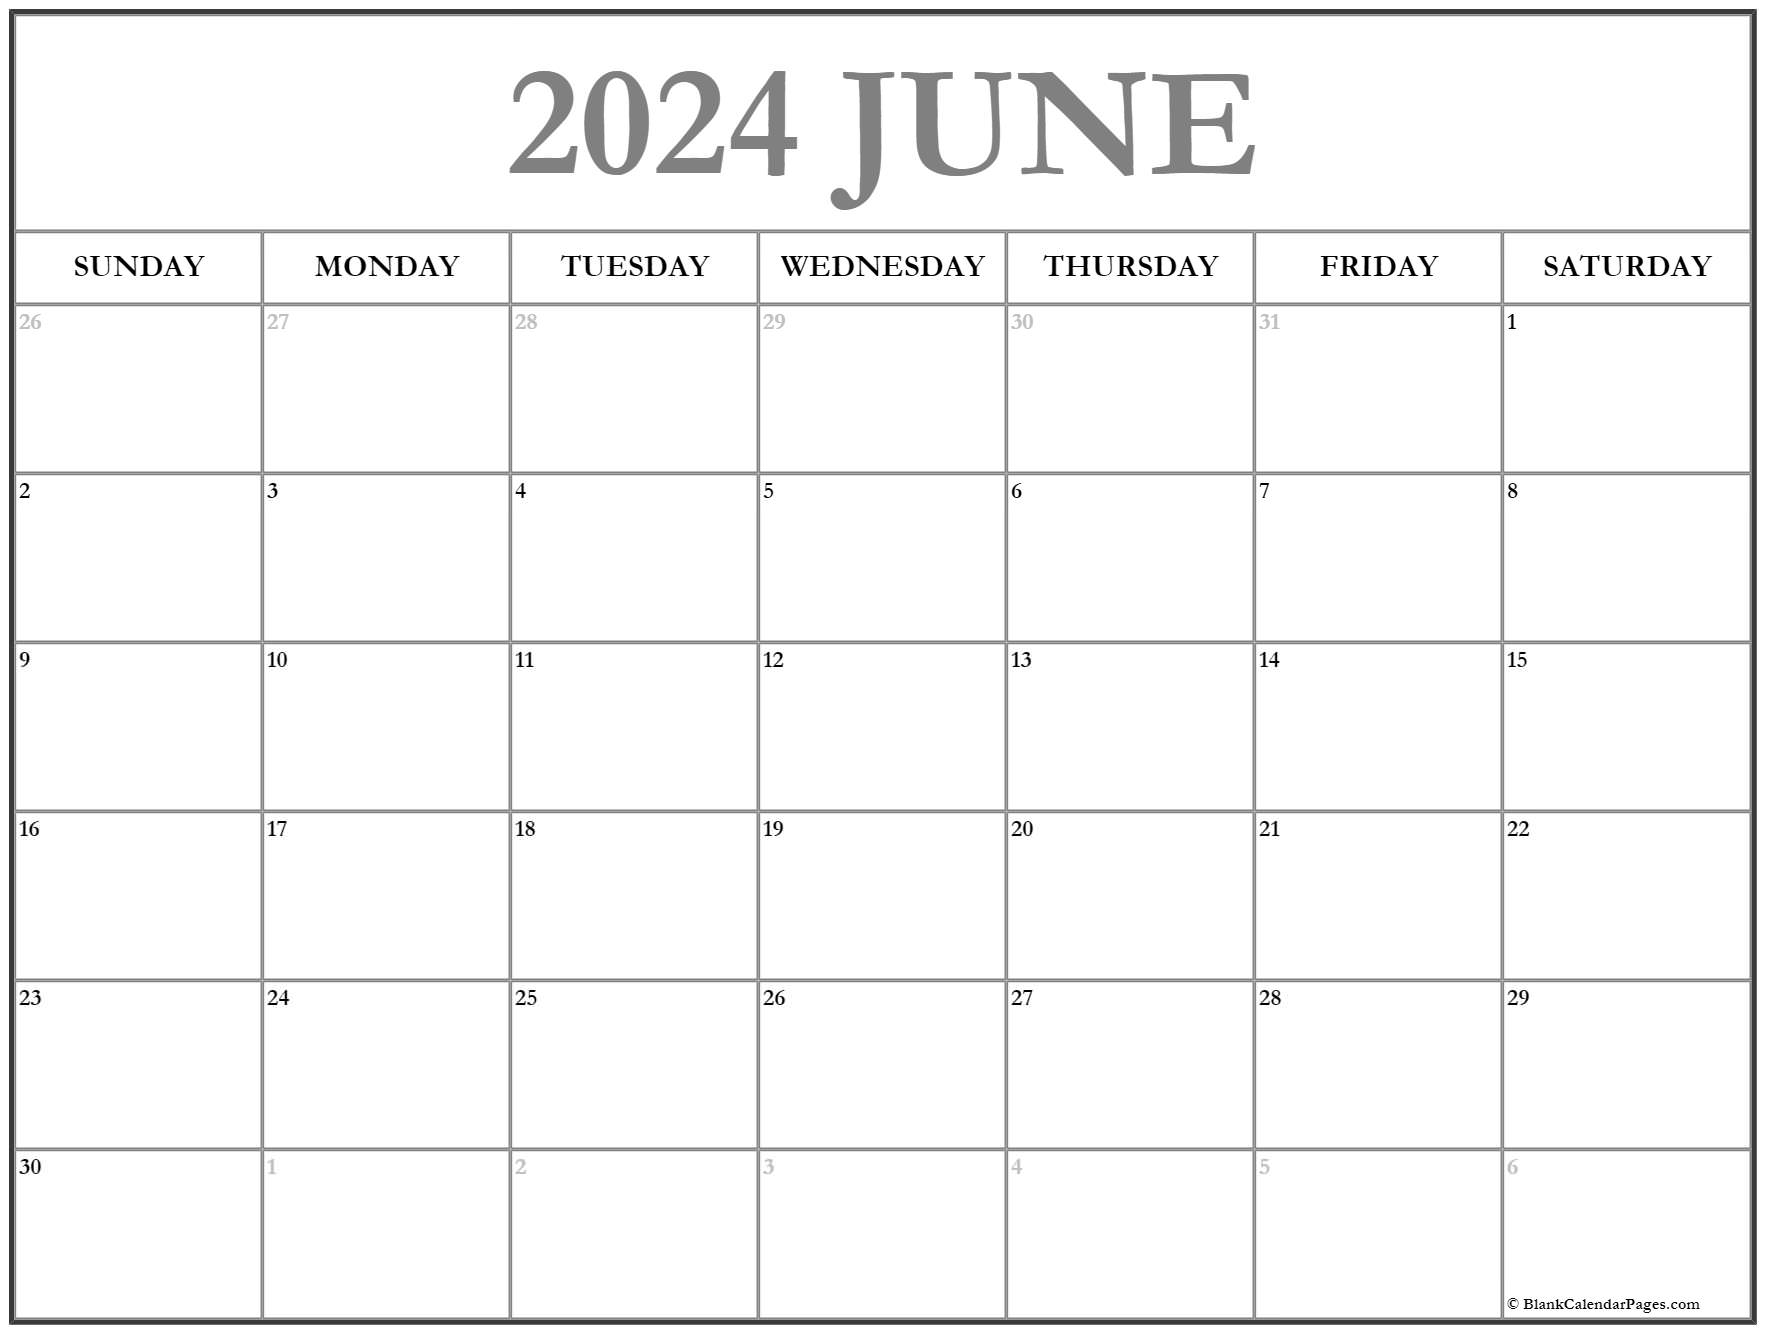 june-2023-lunar-calendar-moon-phase-calendar